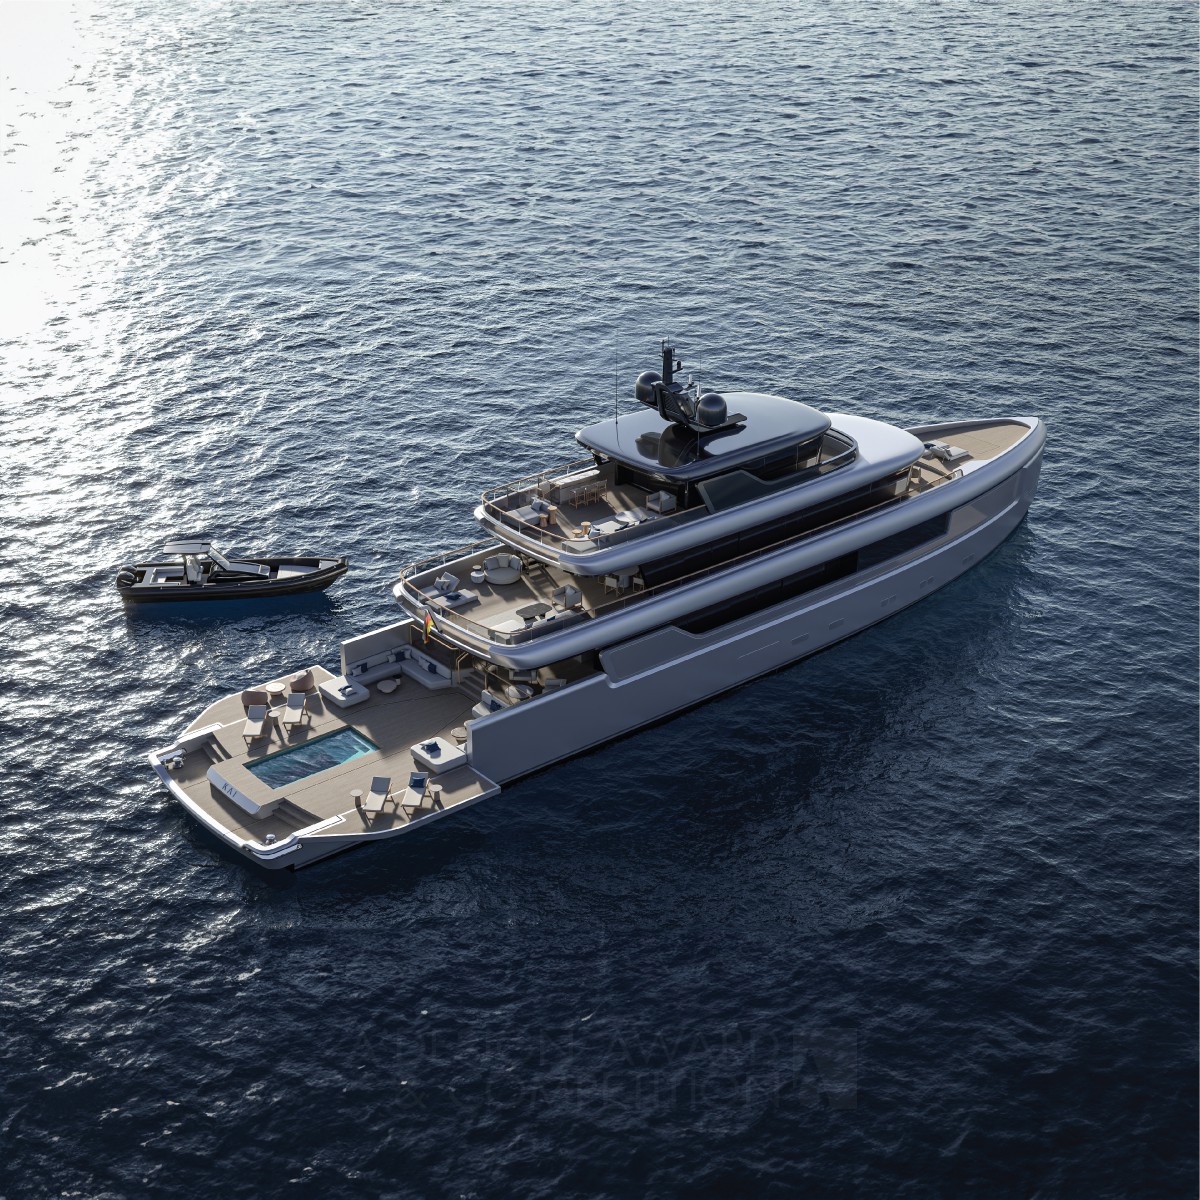 BAZ Yacht Design wins Platinum at the prestigious A' Yacht and Marine Vessels Design Award with Project Kai Smart Hybrid Motoryacht.